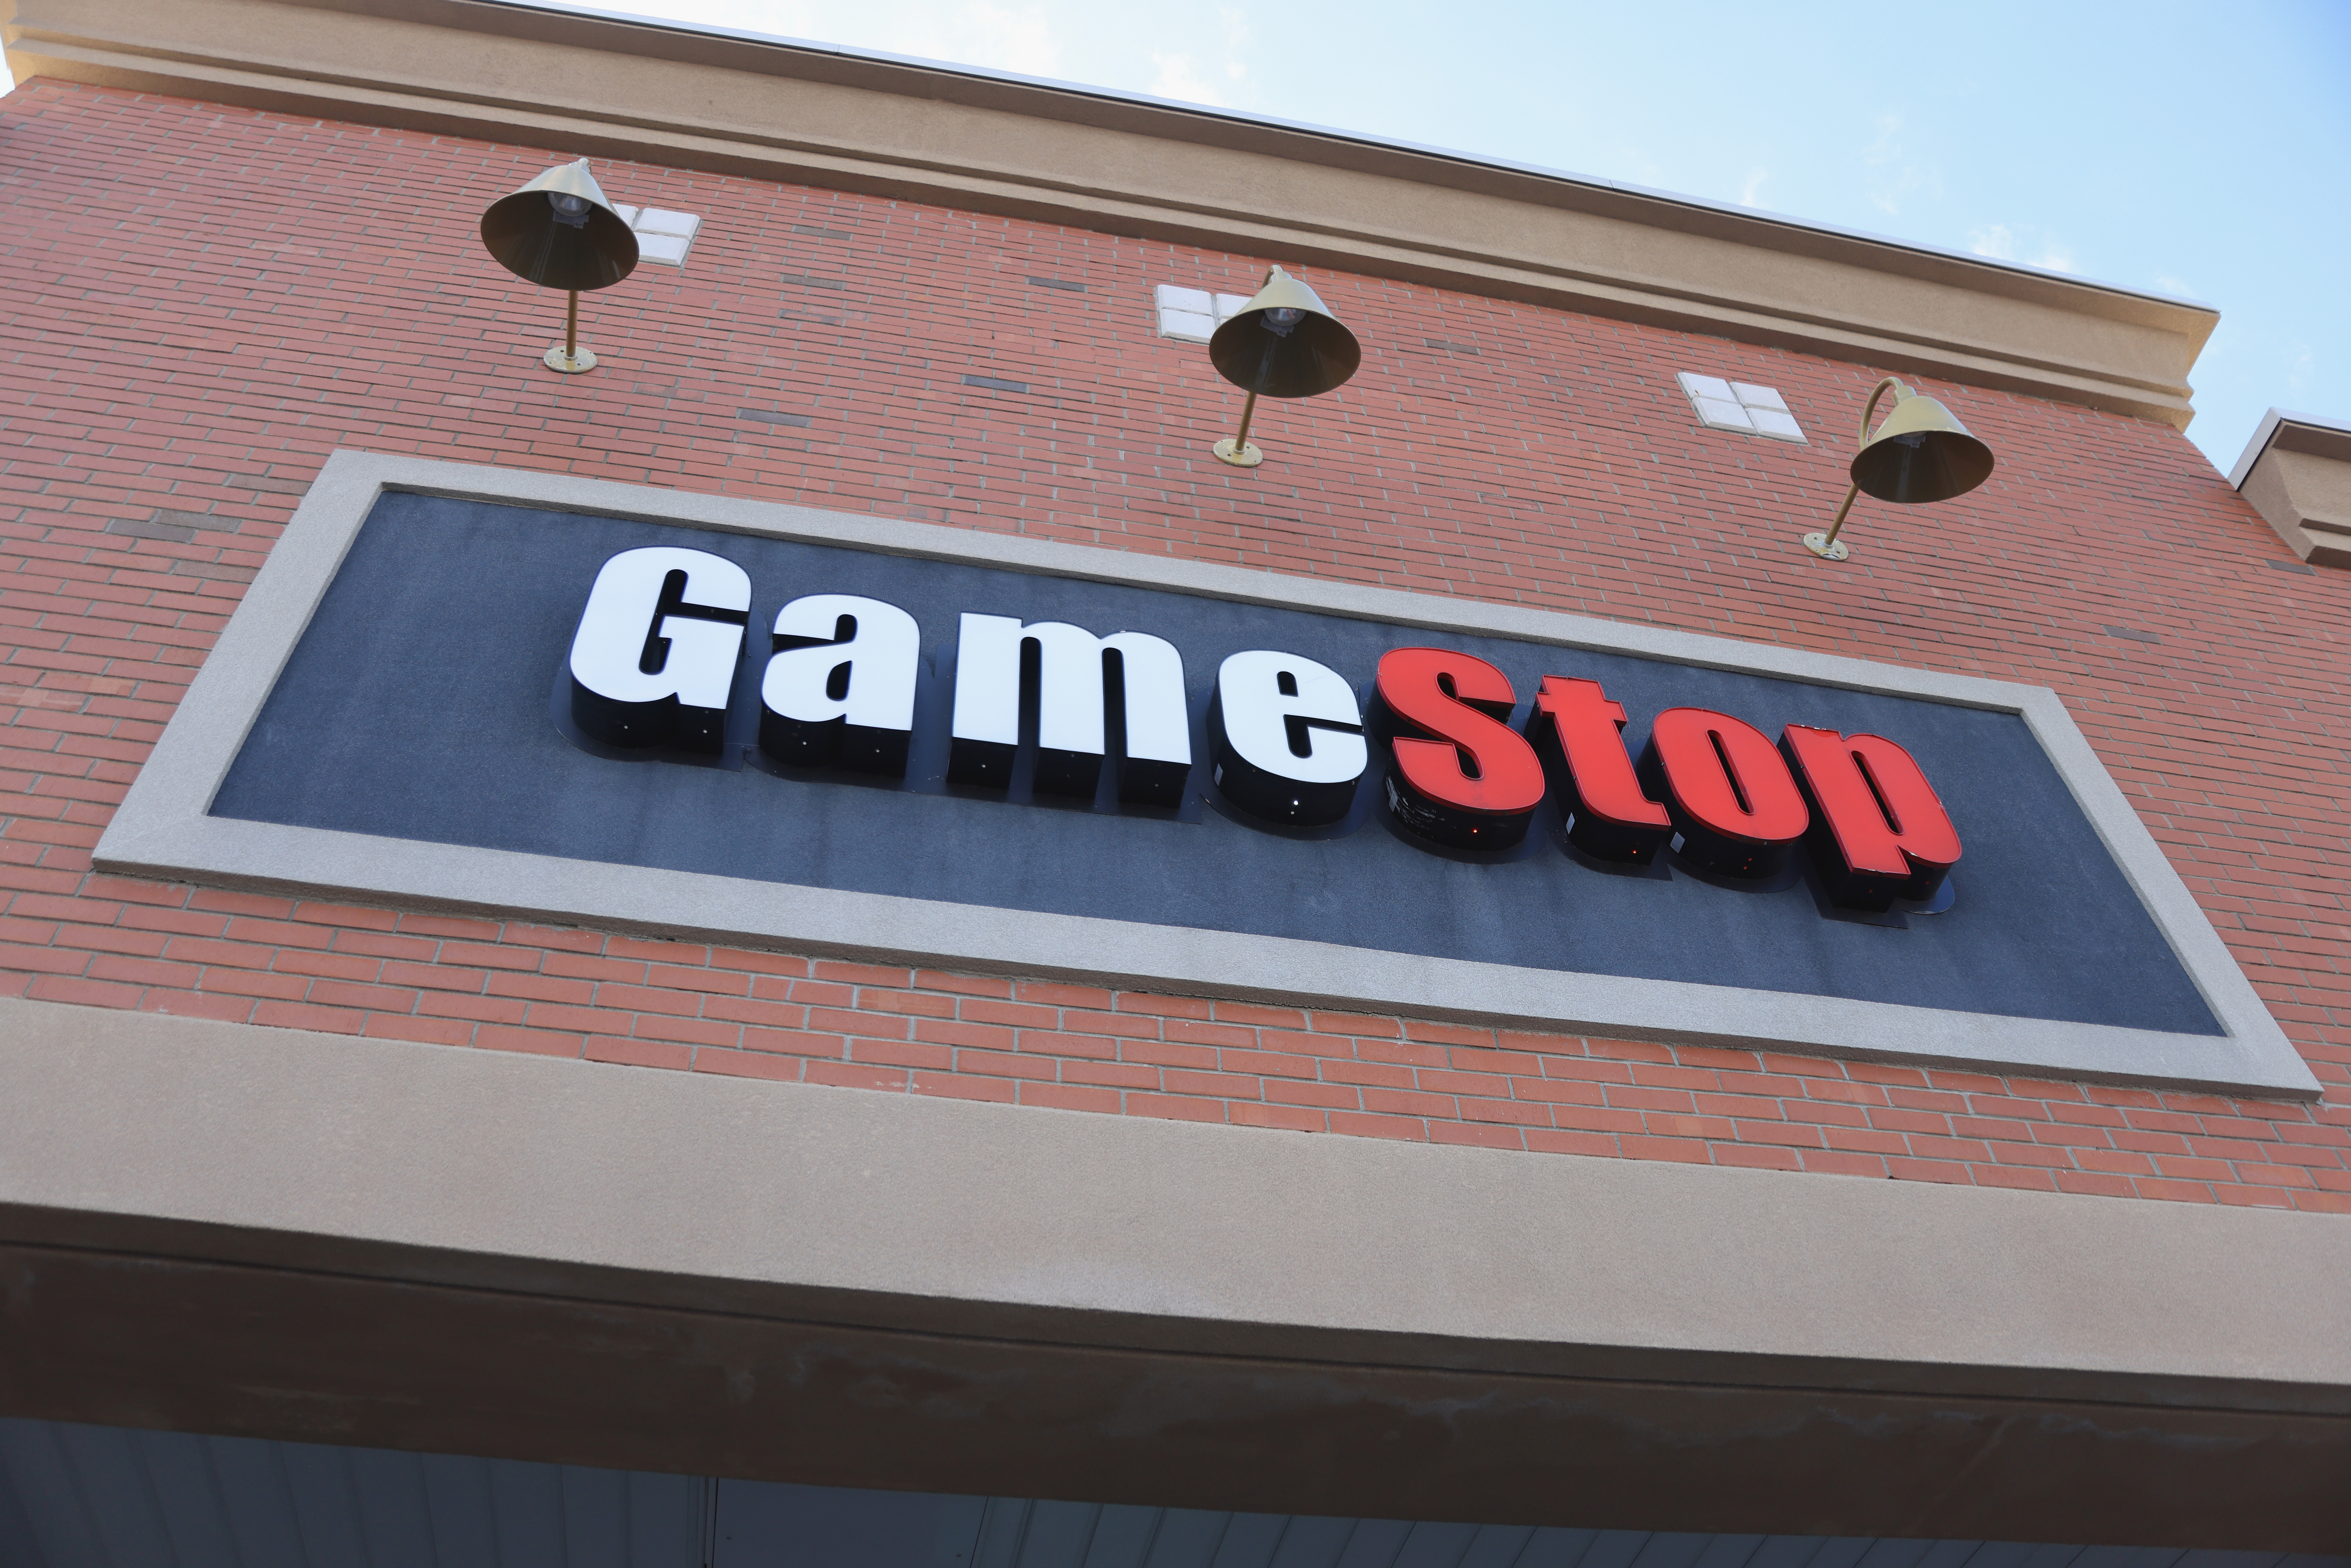 GameStop building logo is pictured